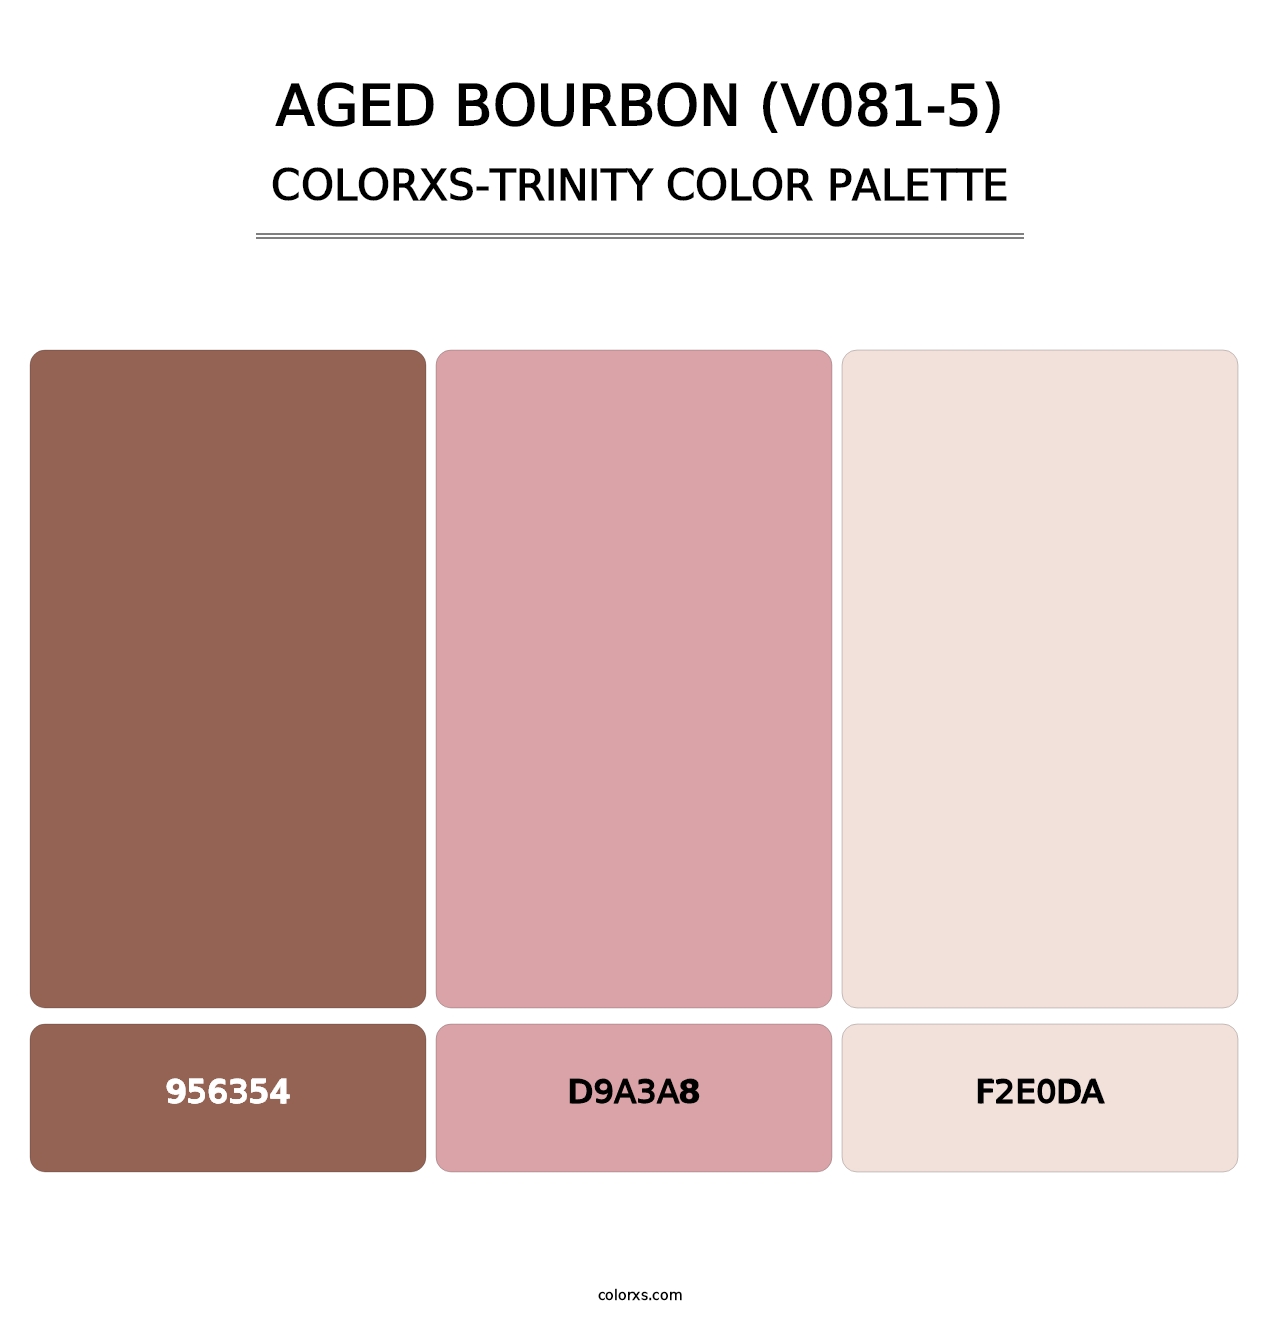 Aged Bourbon (V081-5) - Colorxs Trinity Palette